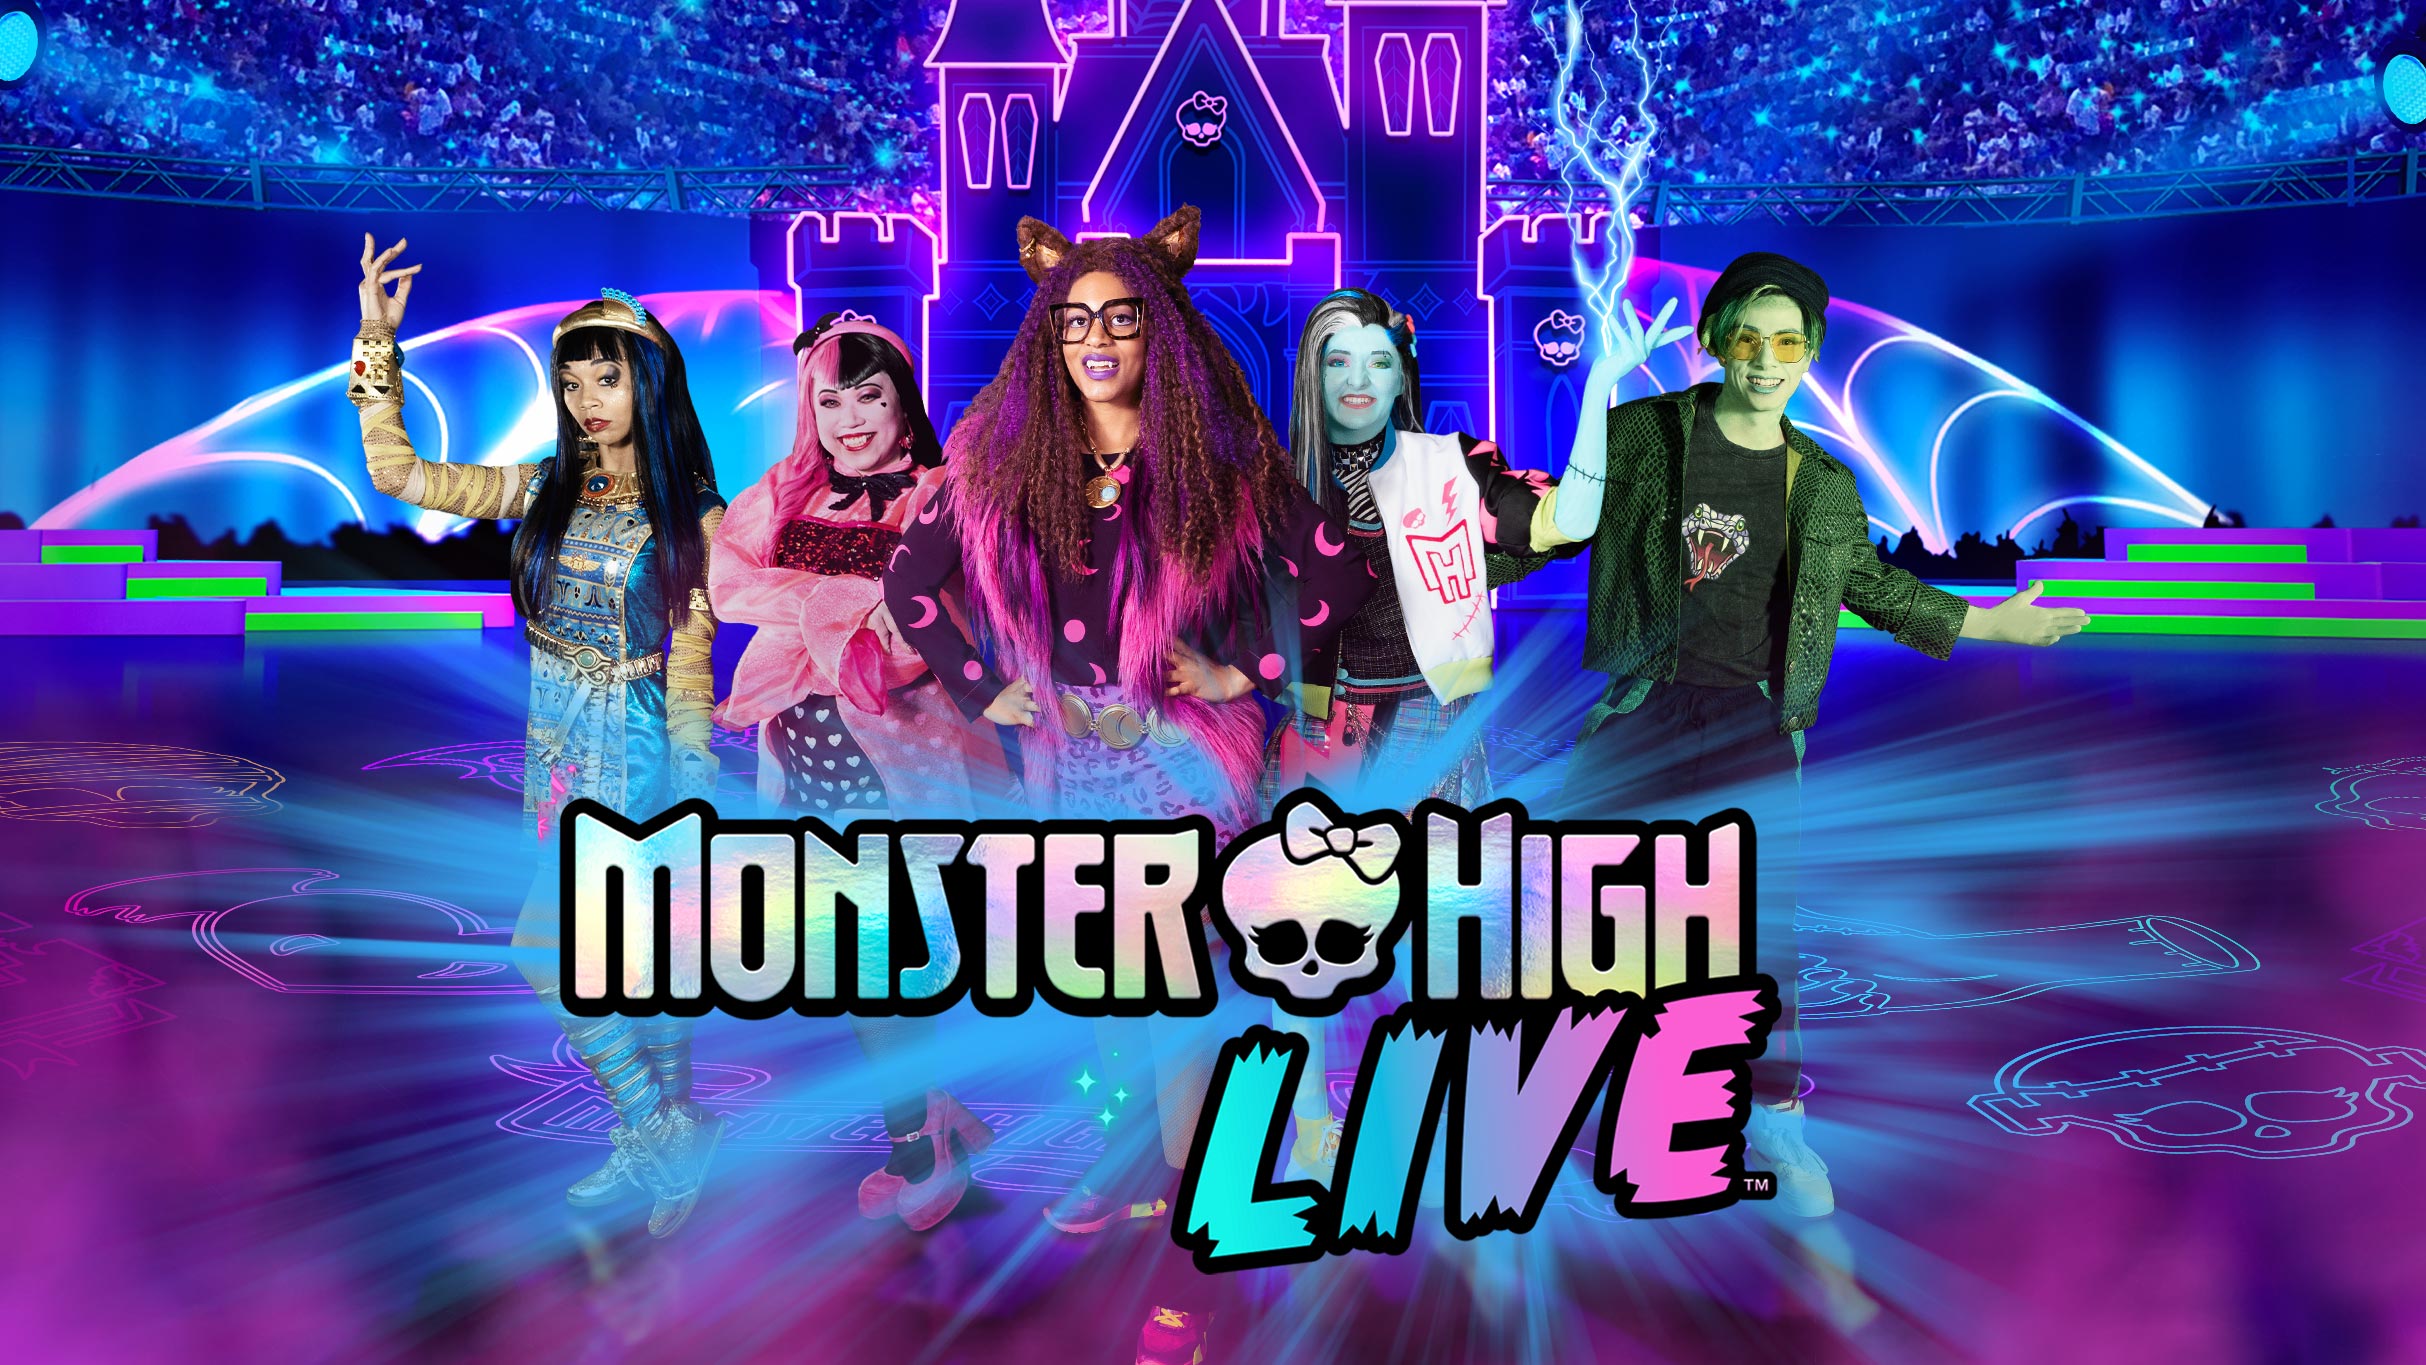 Monster High Live in Hoffman Estates promo photo for Official Platinum Onsale presale offer code